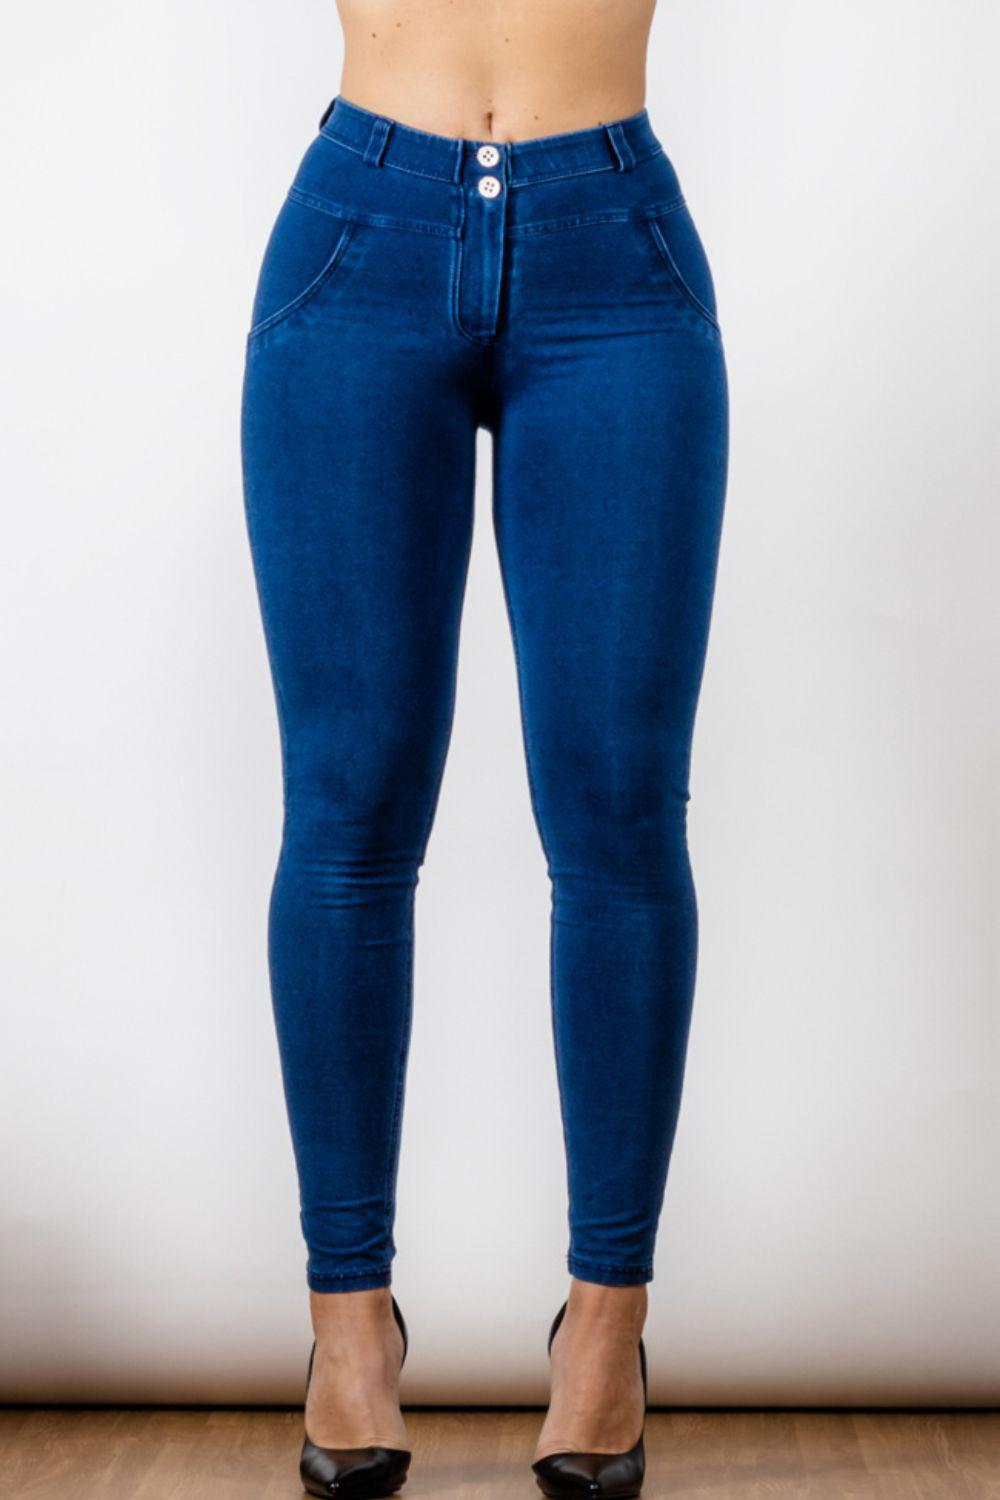 Shascullfites Dark Blue Stretch Skinny Jeans Woman Fashion